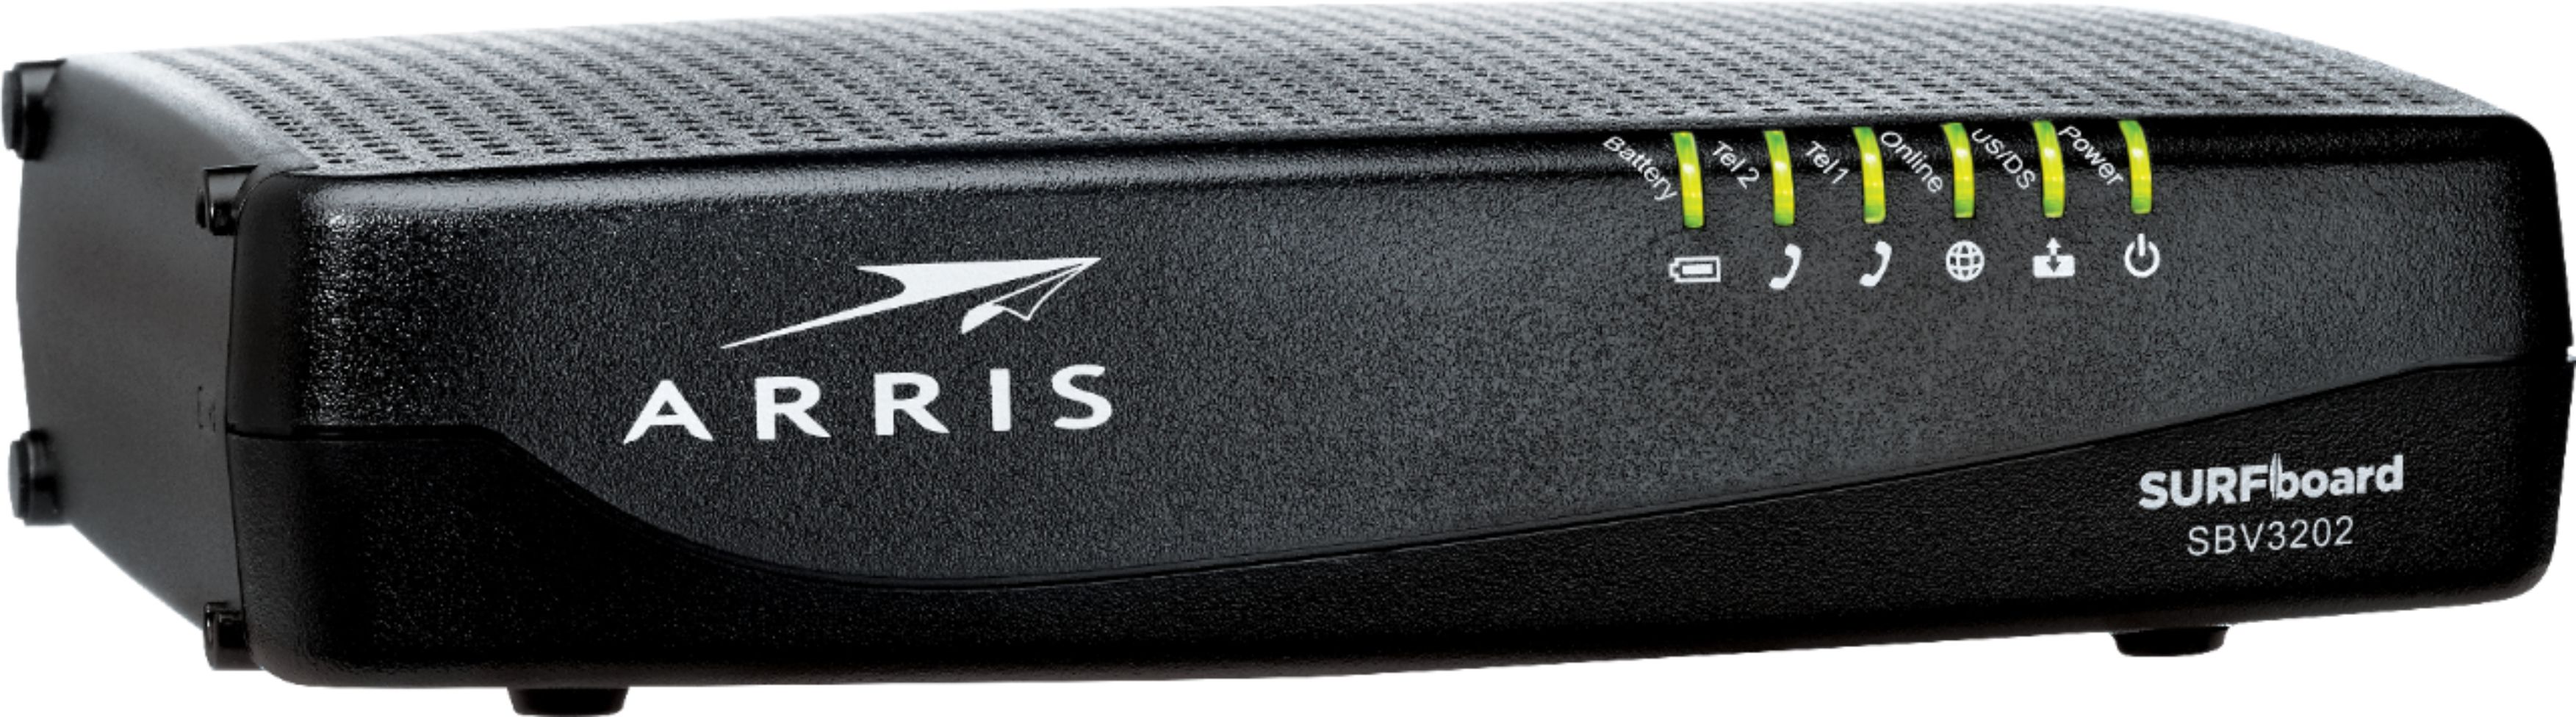 ARRIS - SURFboard 32 x 8 DOCSIS 3.0 Voice Cable Modem for Xfinity - Black